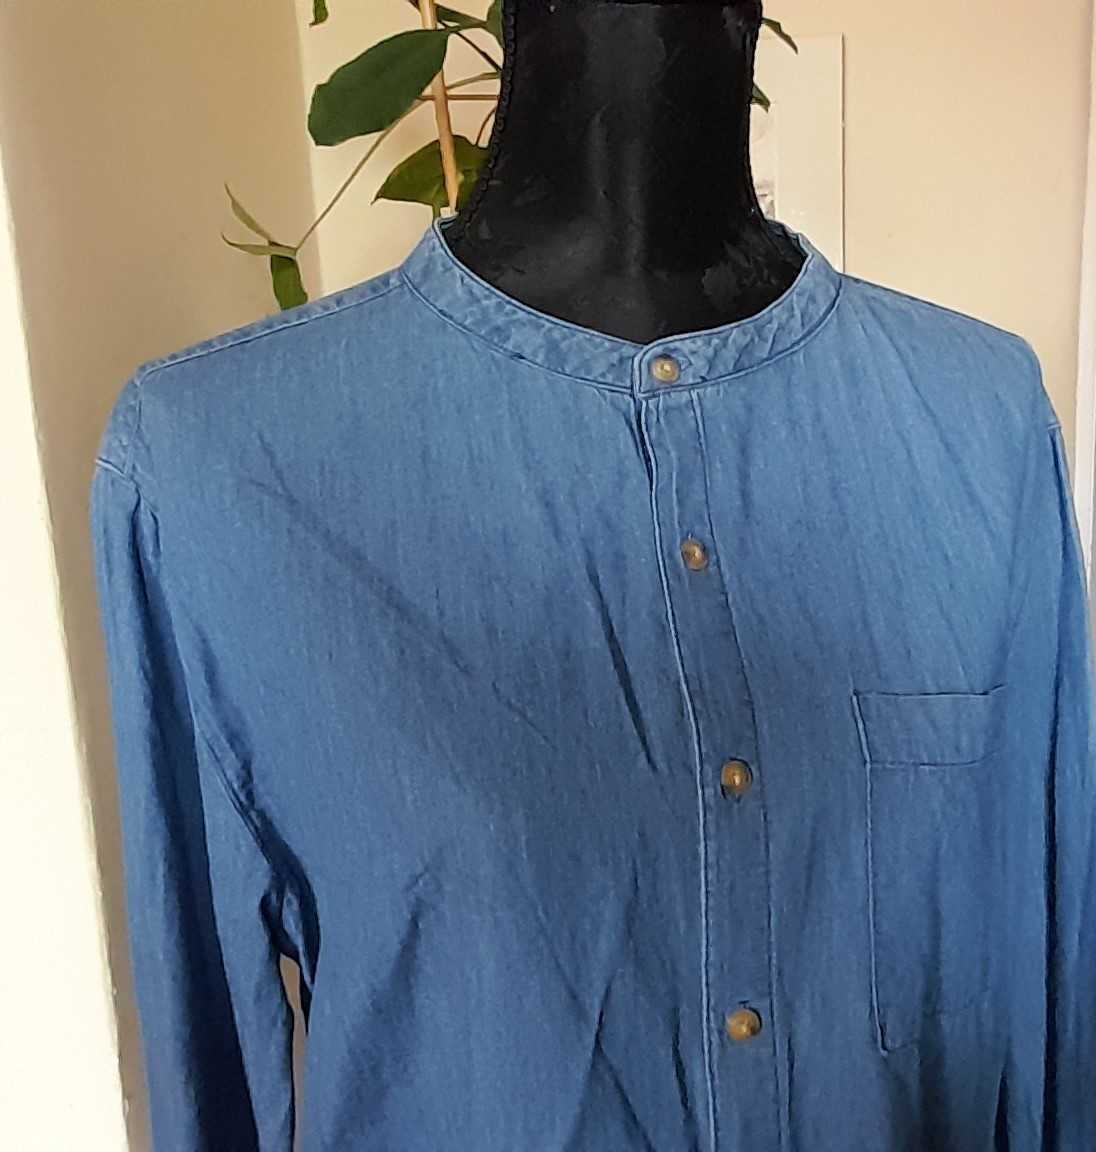 Koszula męska Jeans    Bawełna 100% - XL  stan idealny  SHIRT   stójka